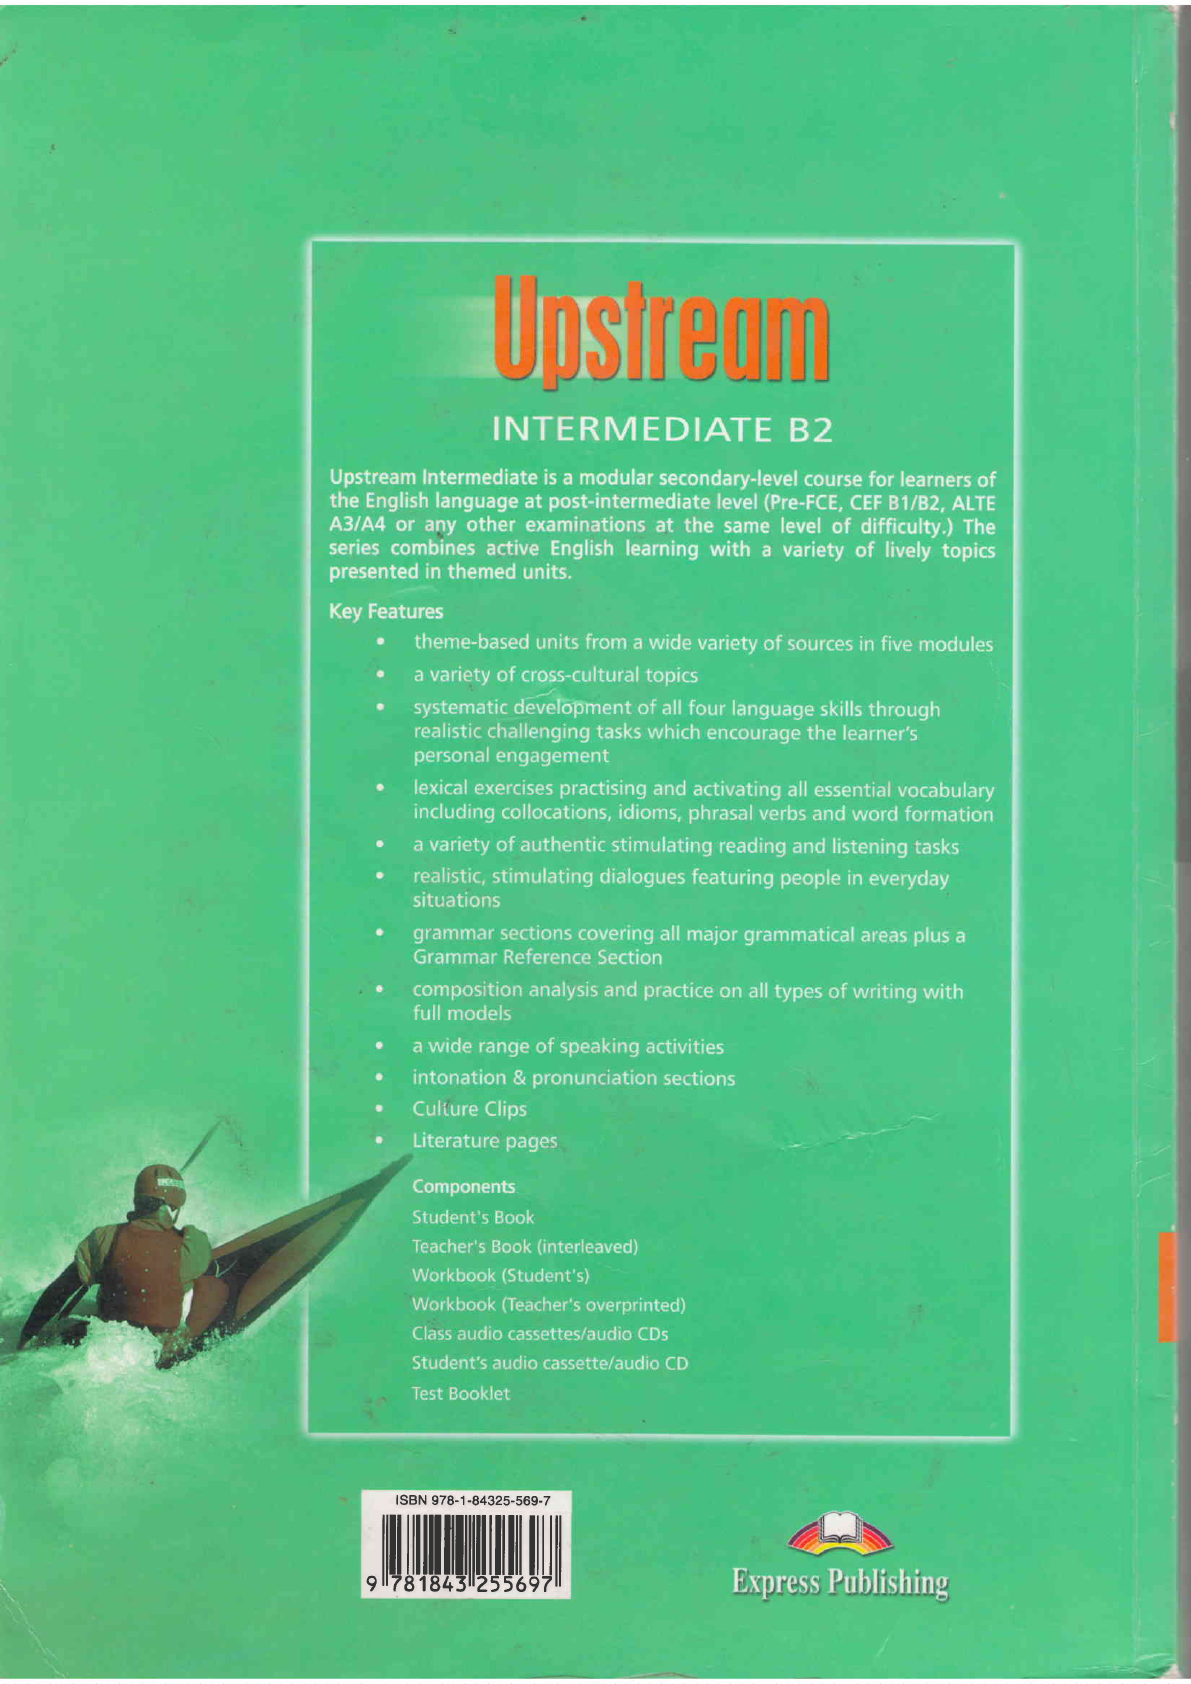 Upstream book pdf